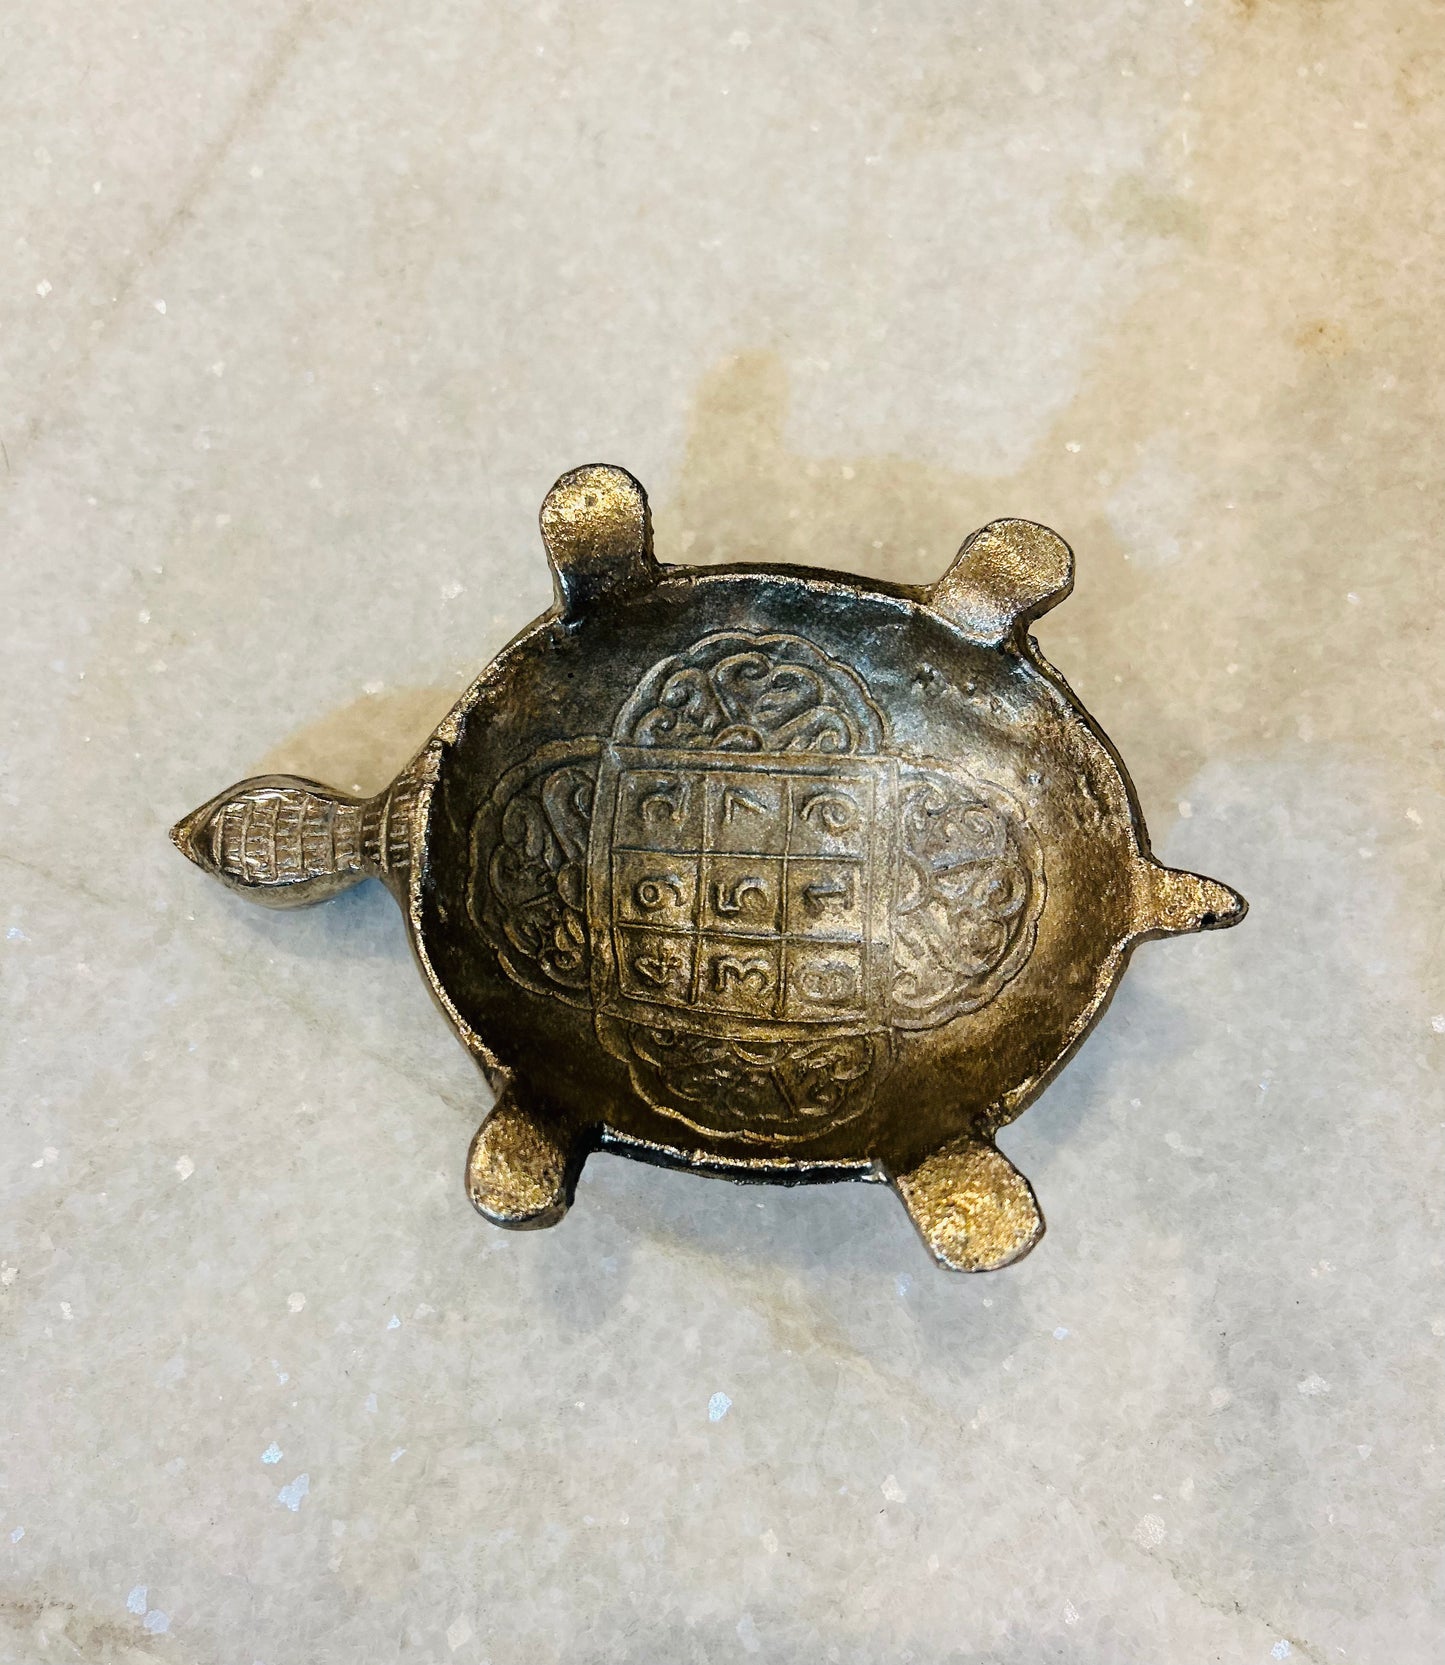 Metal tortoise